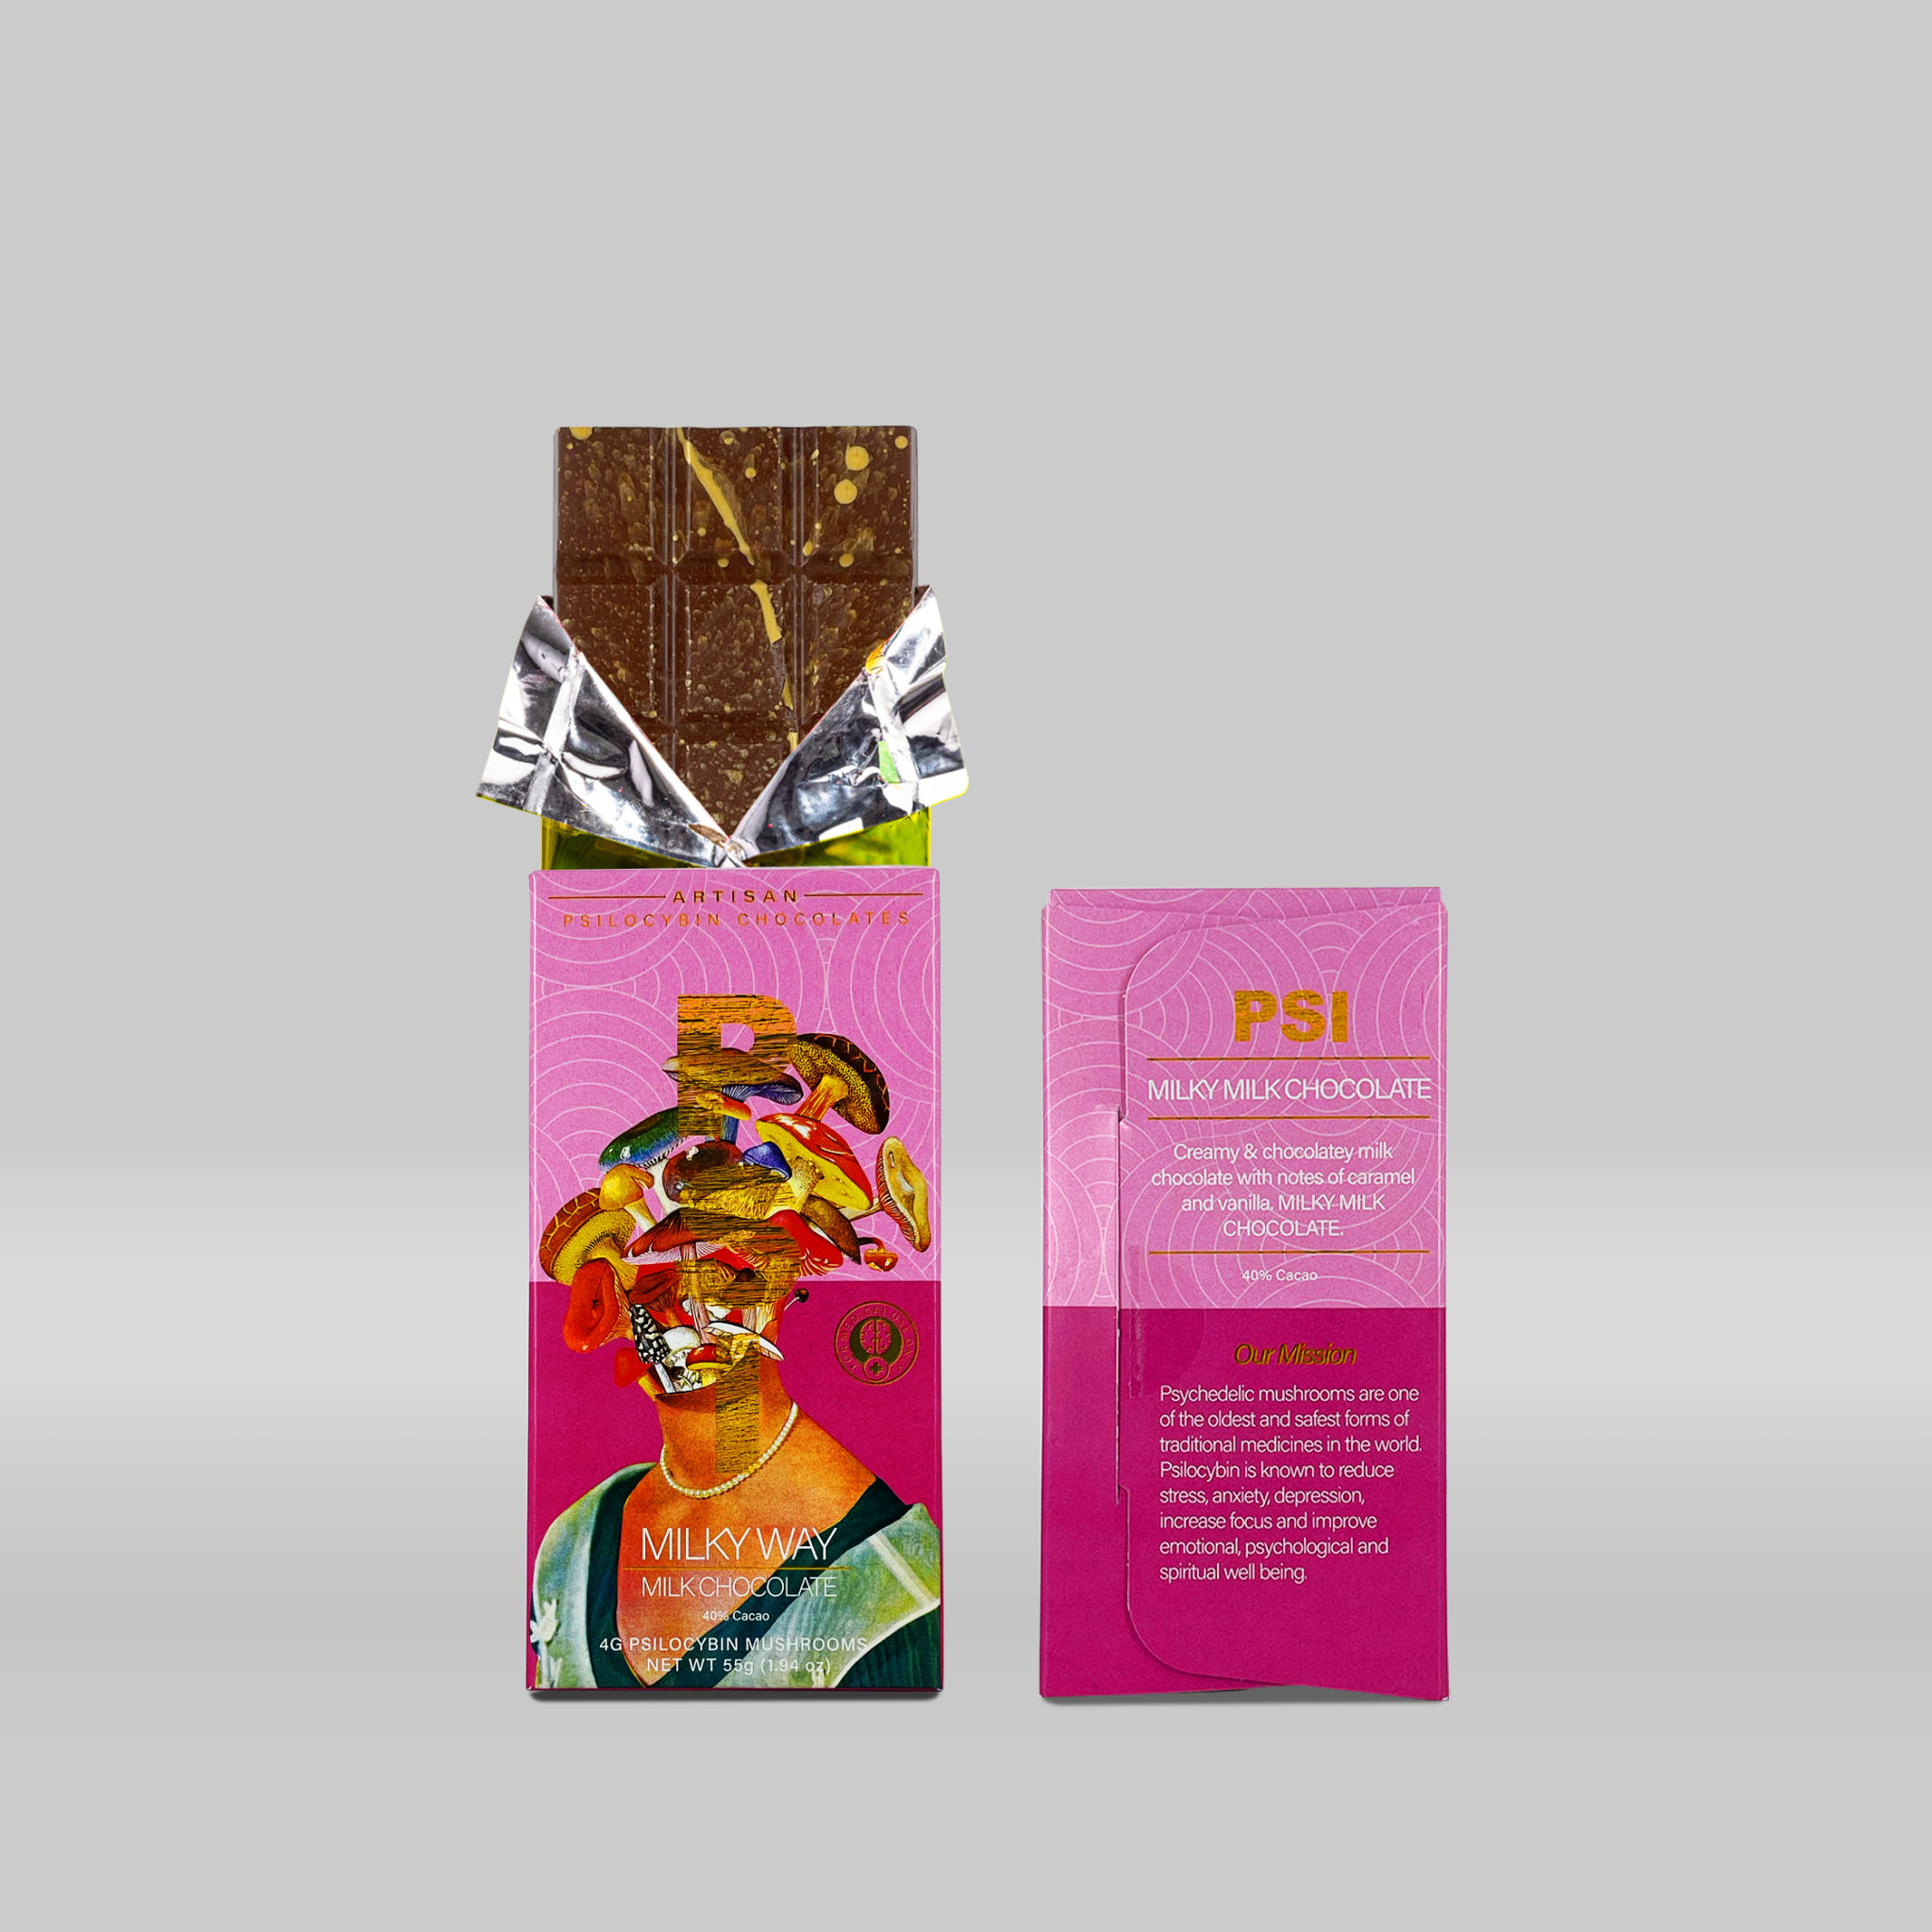 Buy PSI Chocolate Chocolate Bar Online